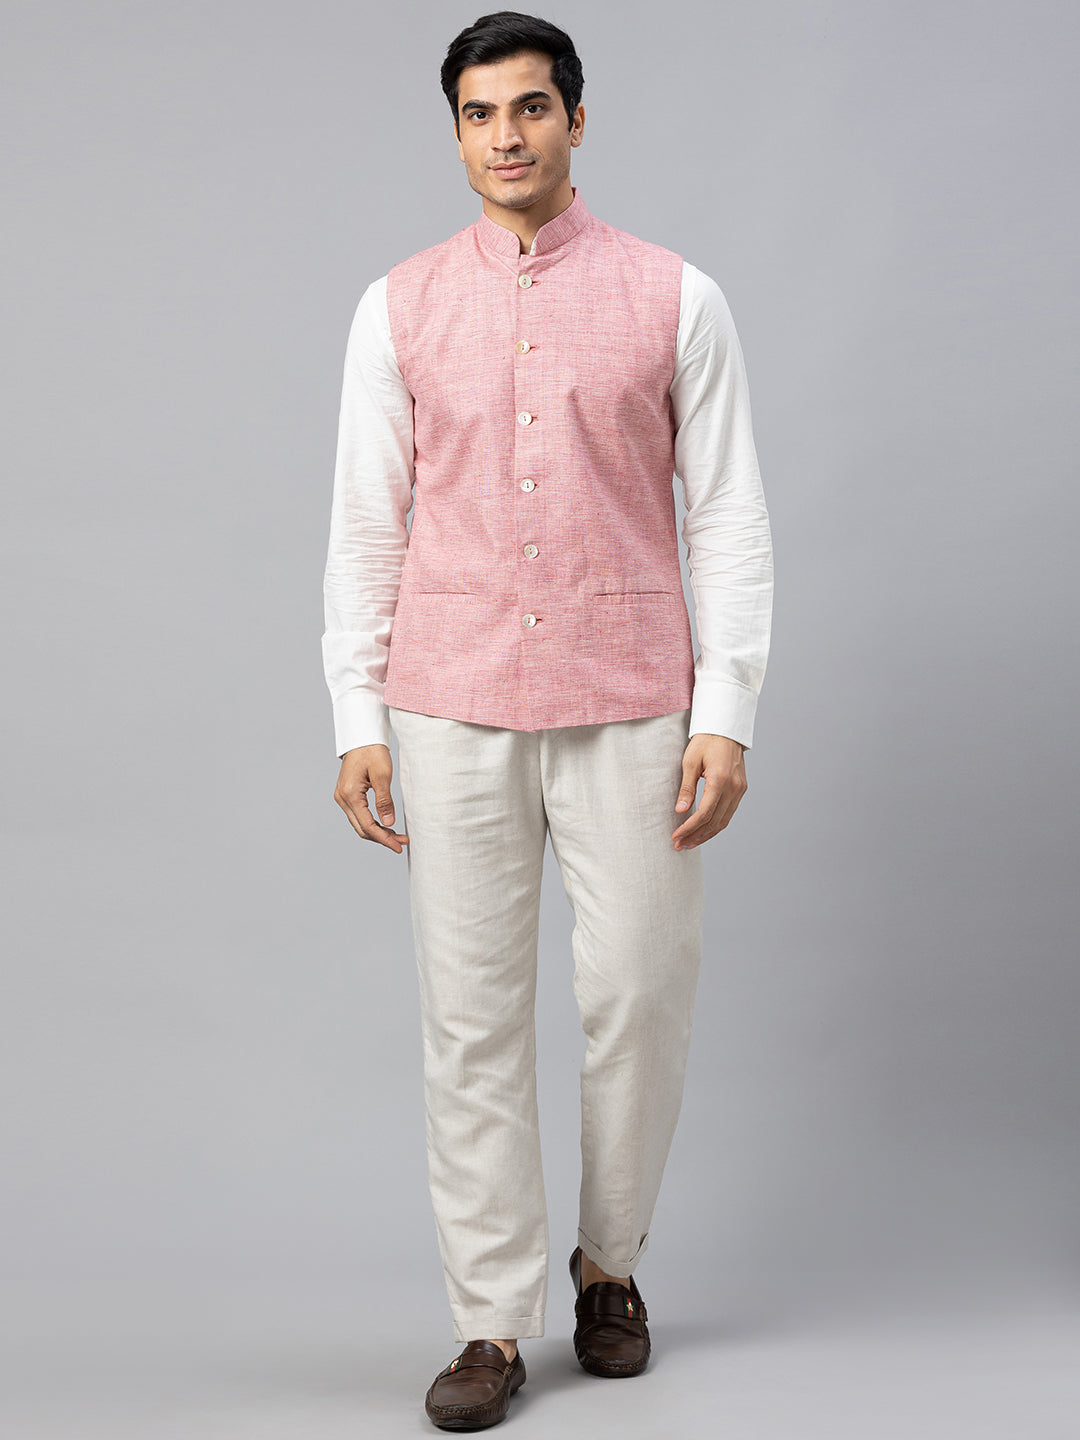 Wintage Men's Tailored Fit Party/Festive Indian Nehru Jacket Vest Waistcoat  : Beige